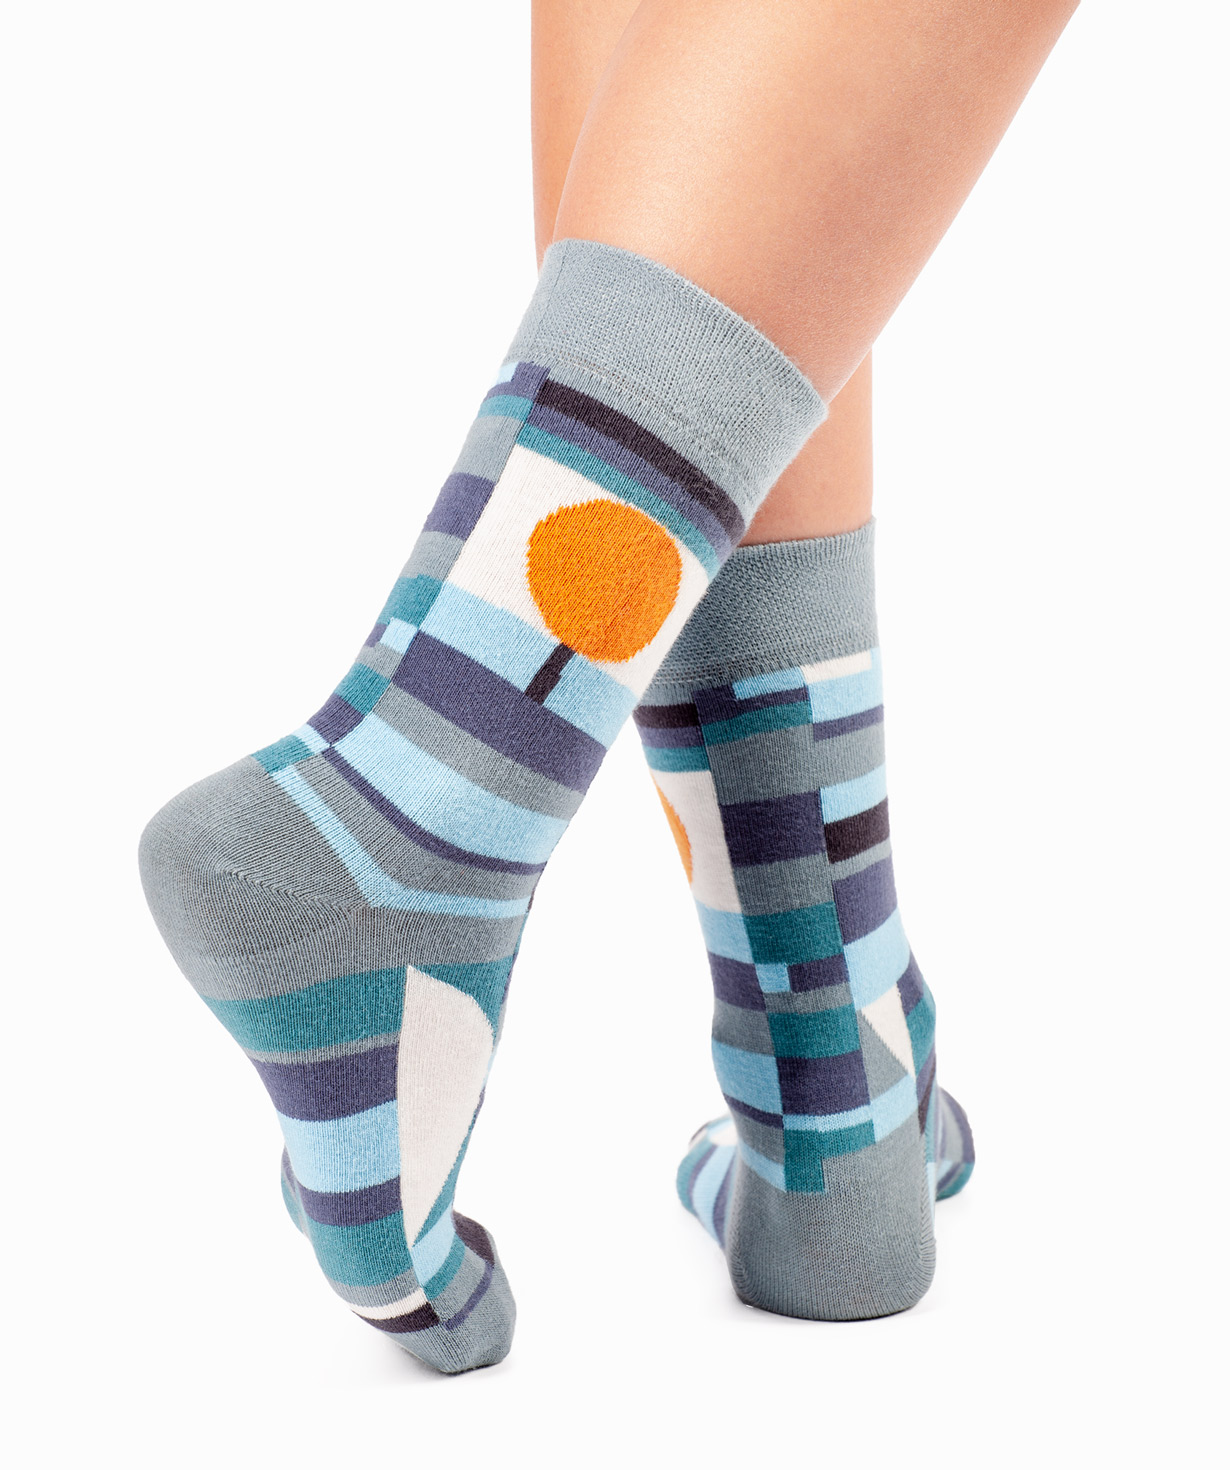 Socks  `Art socks` with  `The messenger of Autumn` painting